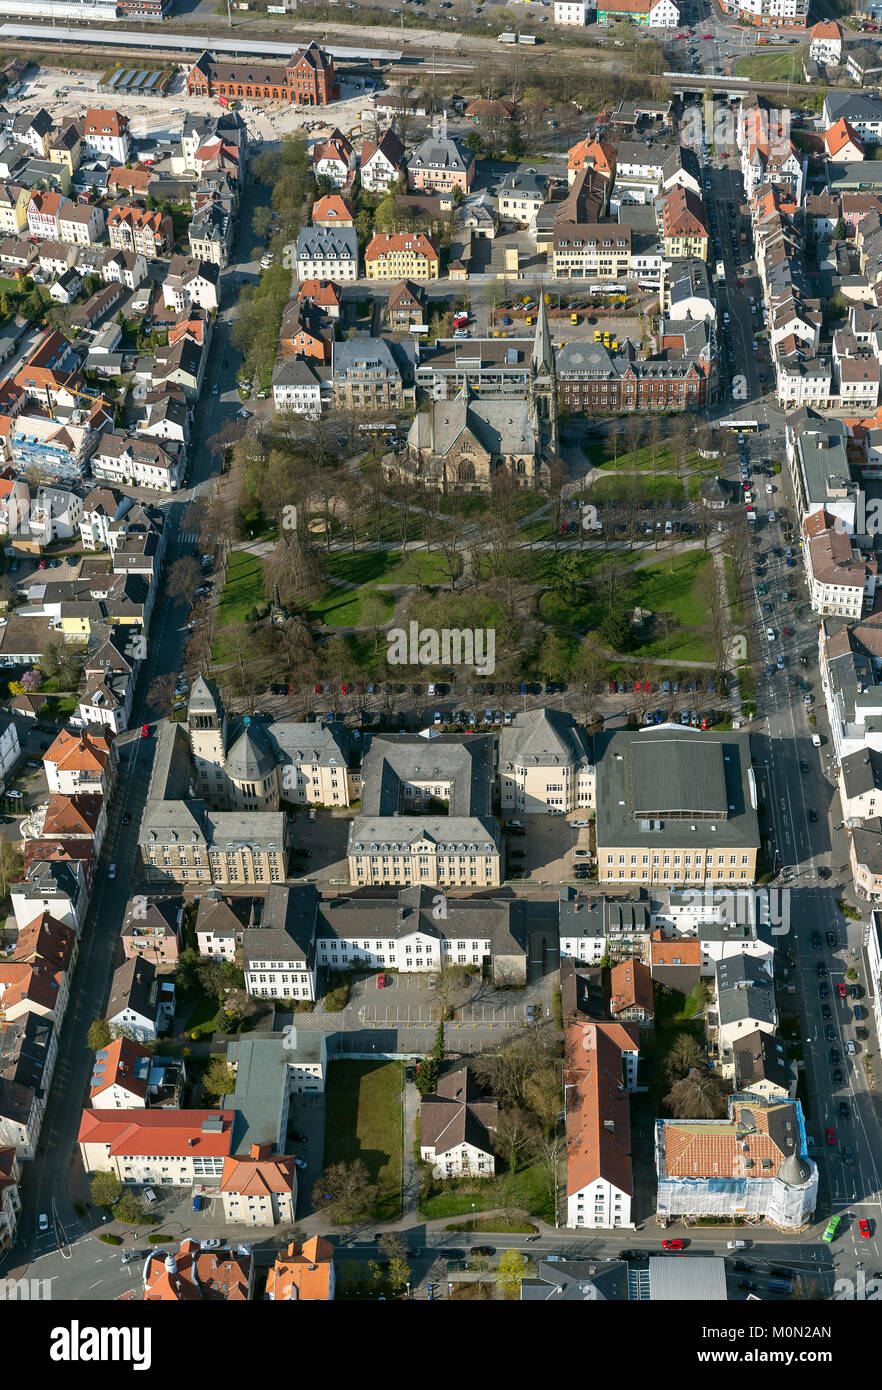 former parliament, Kaiser Wilhelm Square, Christ Church, aerial photograph of Detmold, Detmold, northrhine-westphalia,  Germany, Europe, aerial view,  Stock Photo